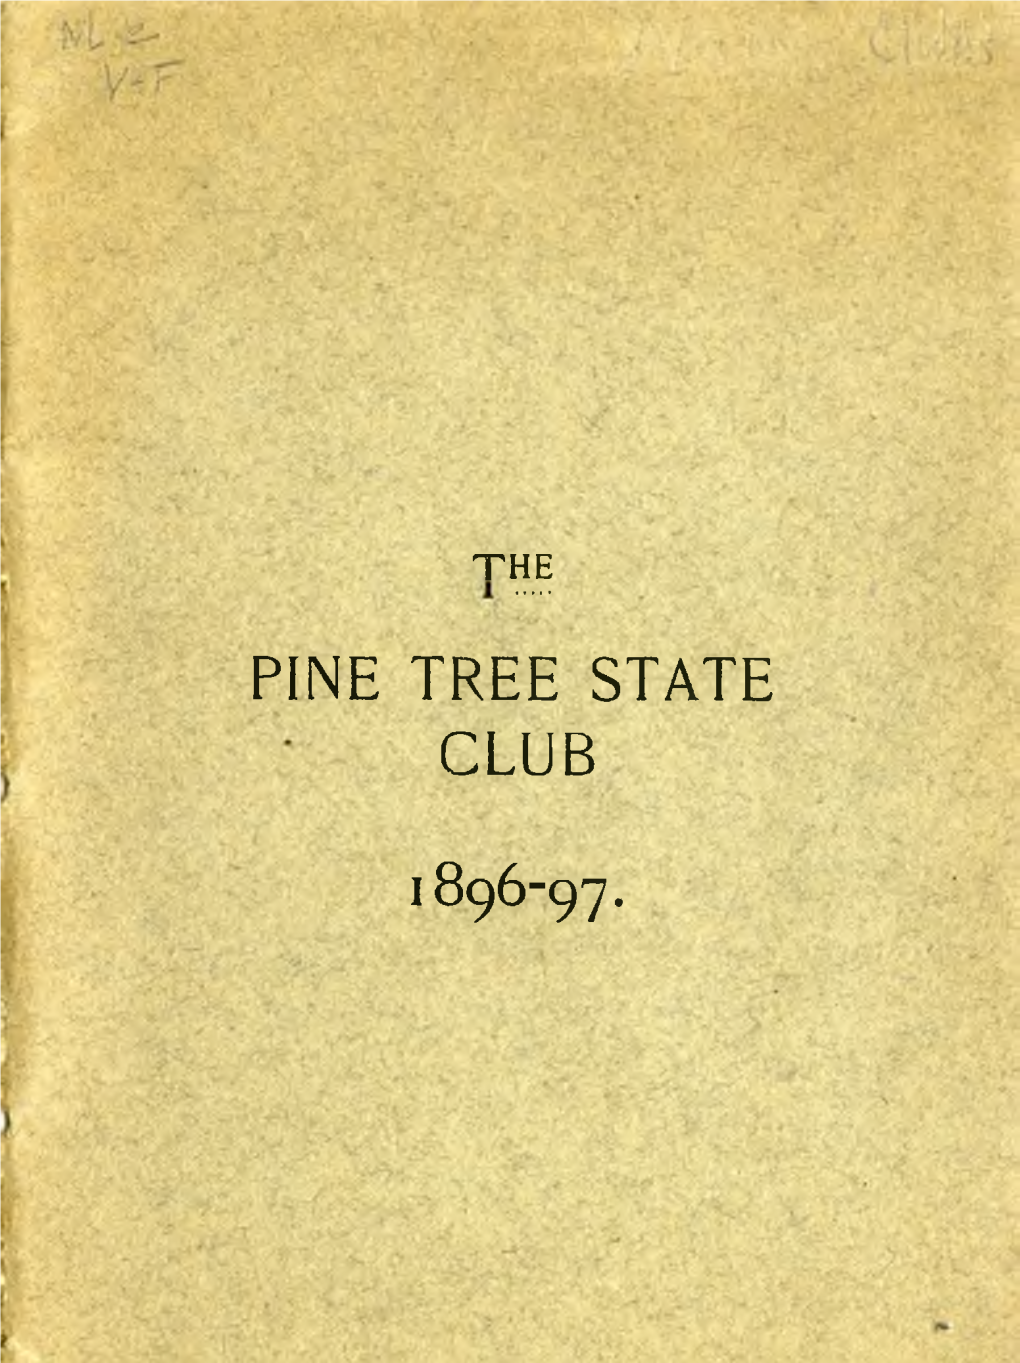 The Pine Tree State Club 1896-97